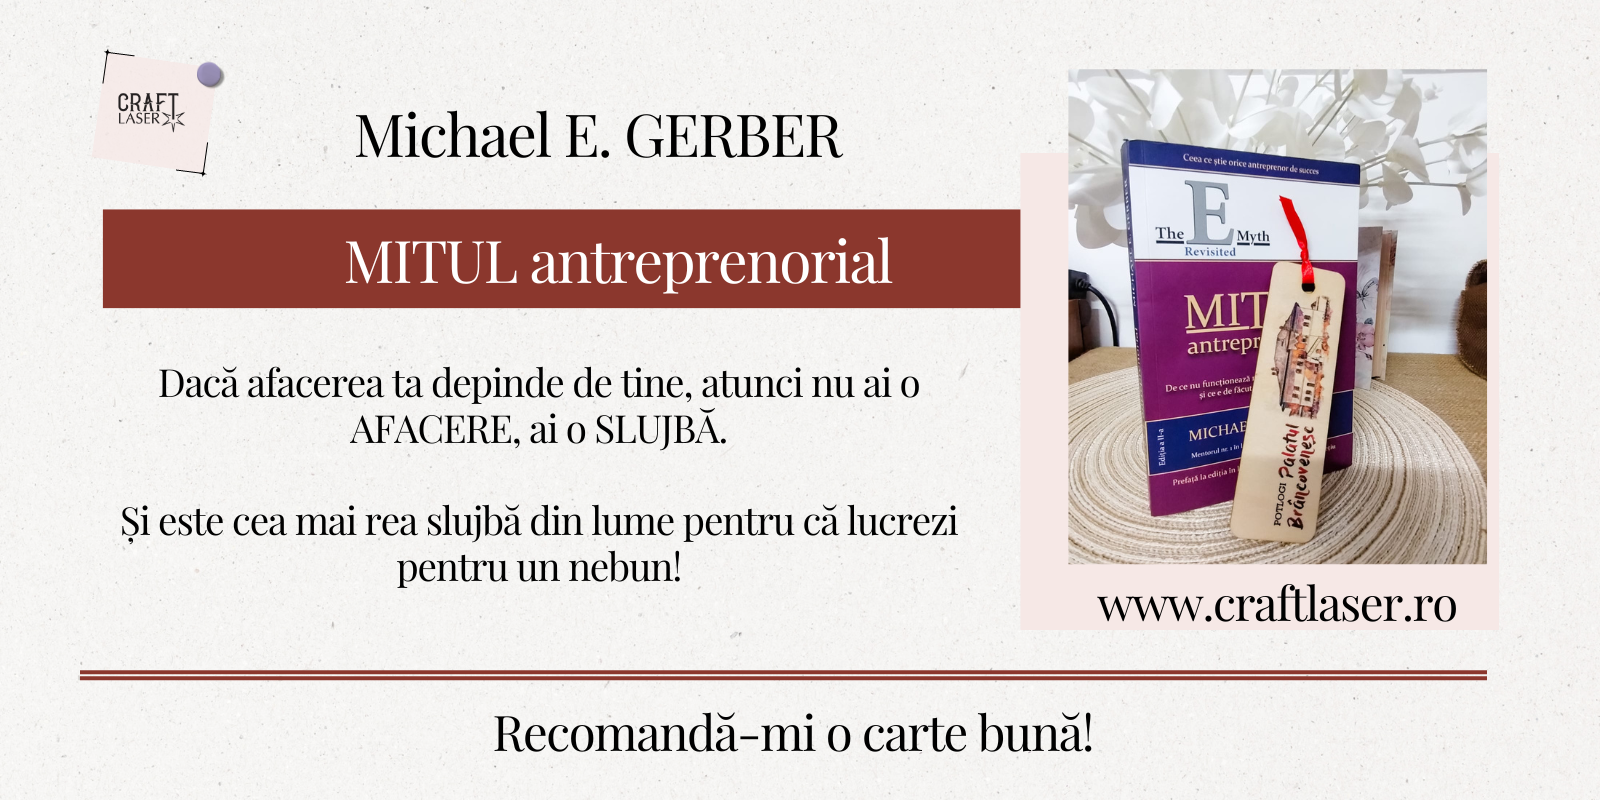 MITUL antreprenorial  de Michael G. Gerber - editia revizuita  (recenzie)